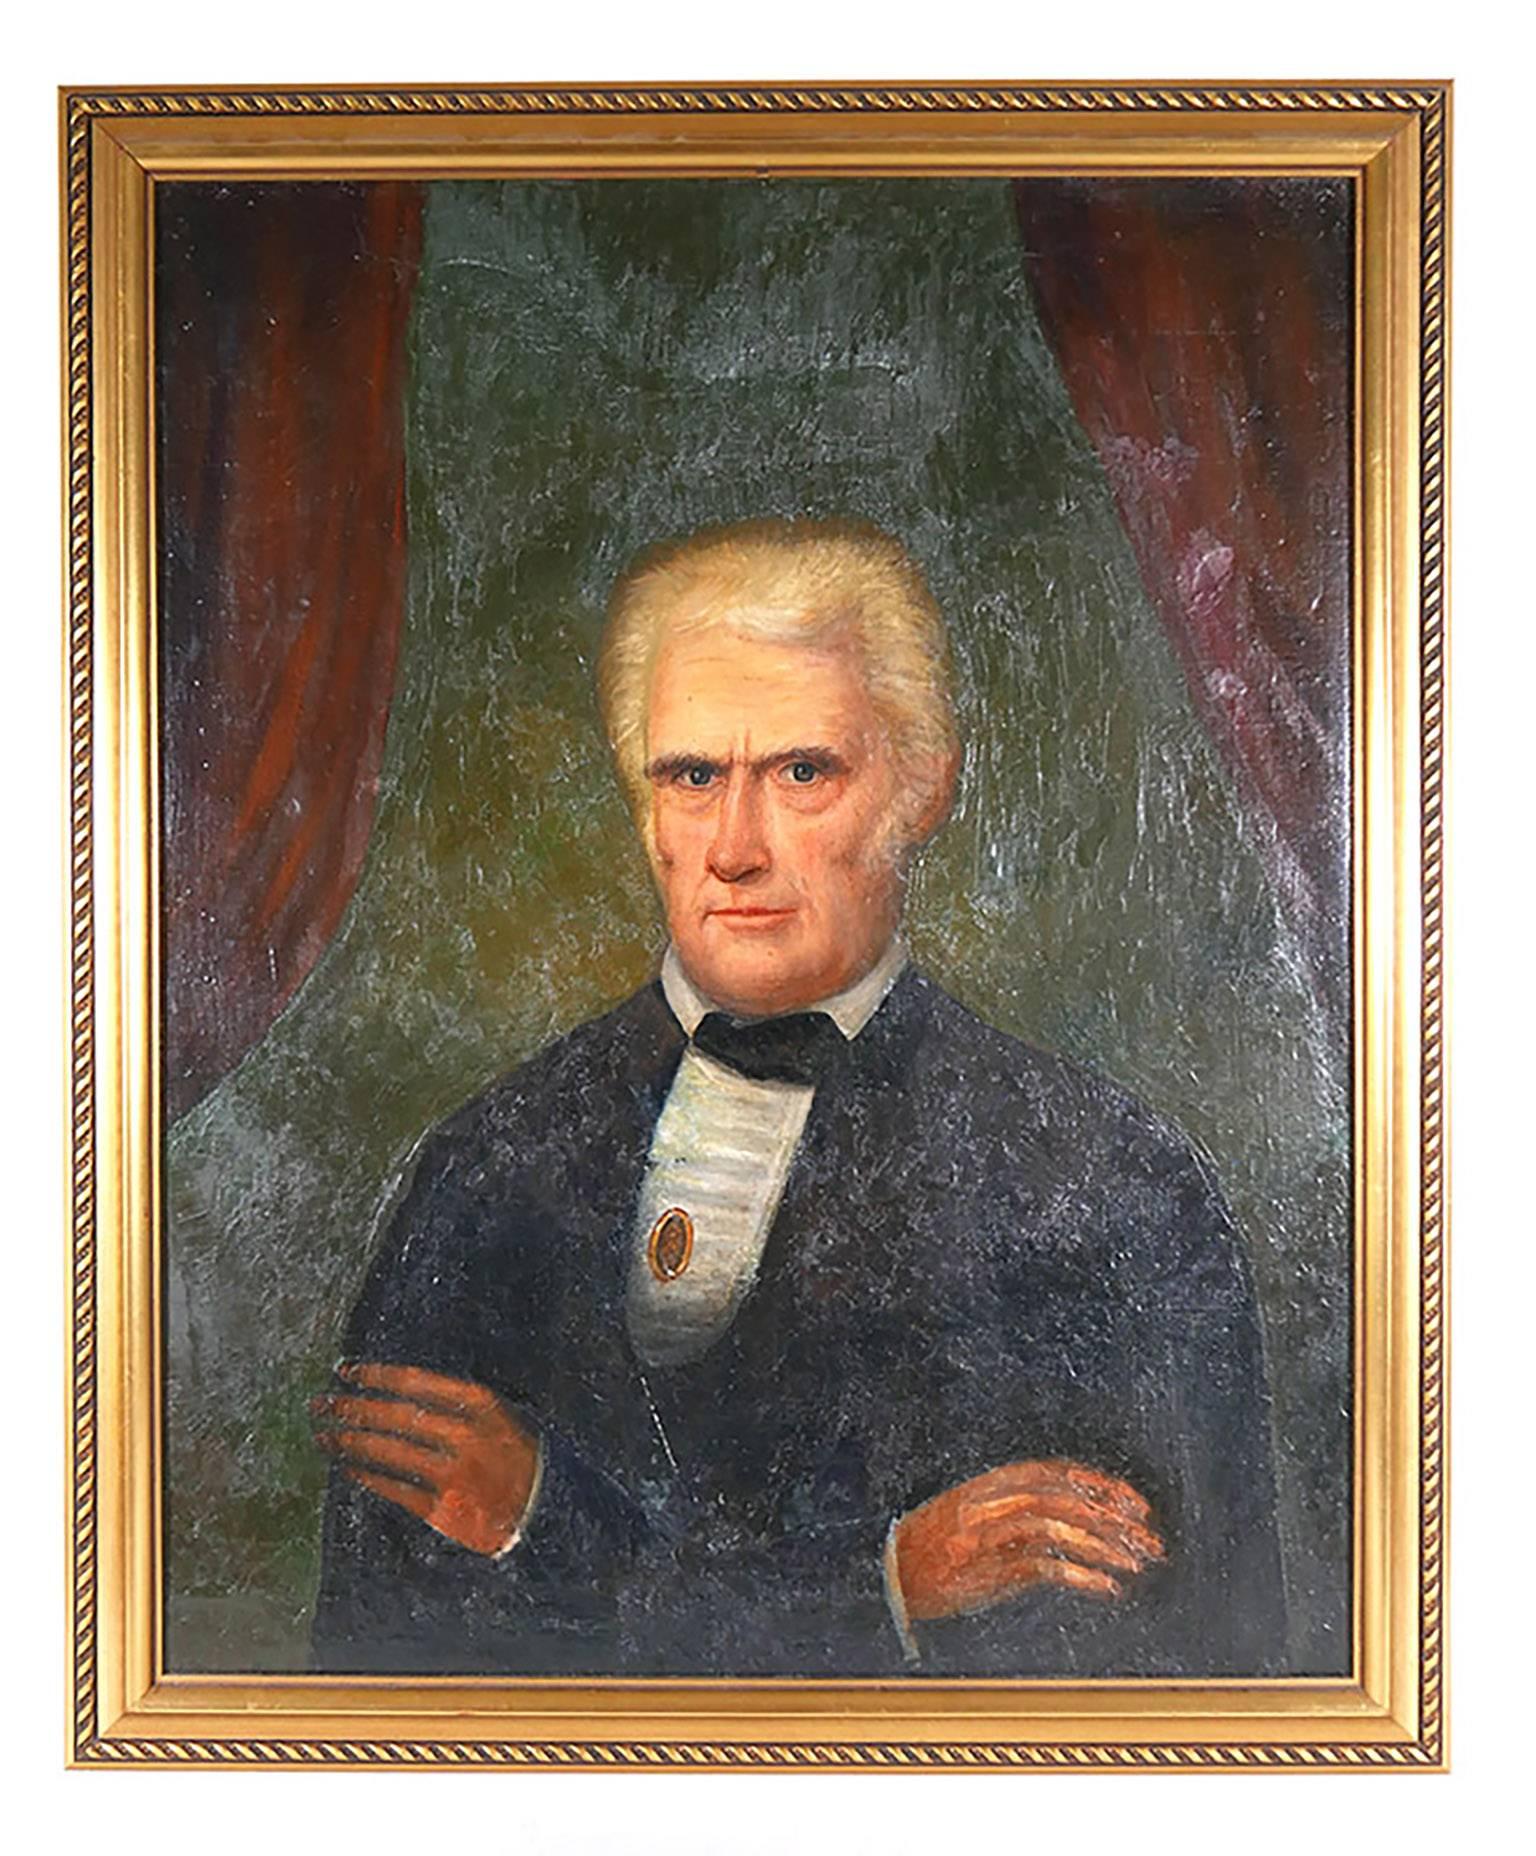 Unknown Portrait Painting - Early 19th Century Folk Art Portrait of President Andrew Jackson